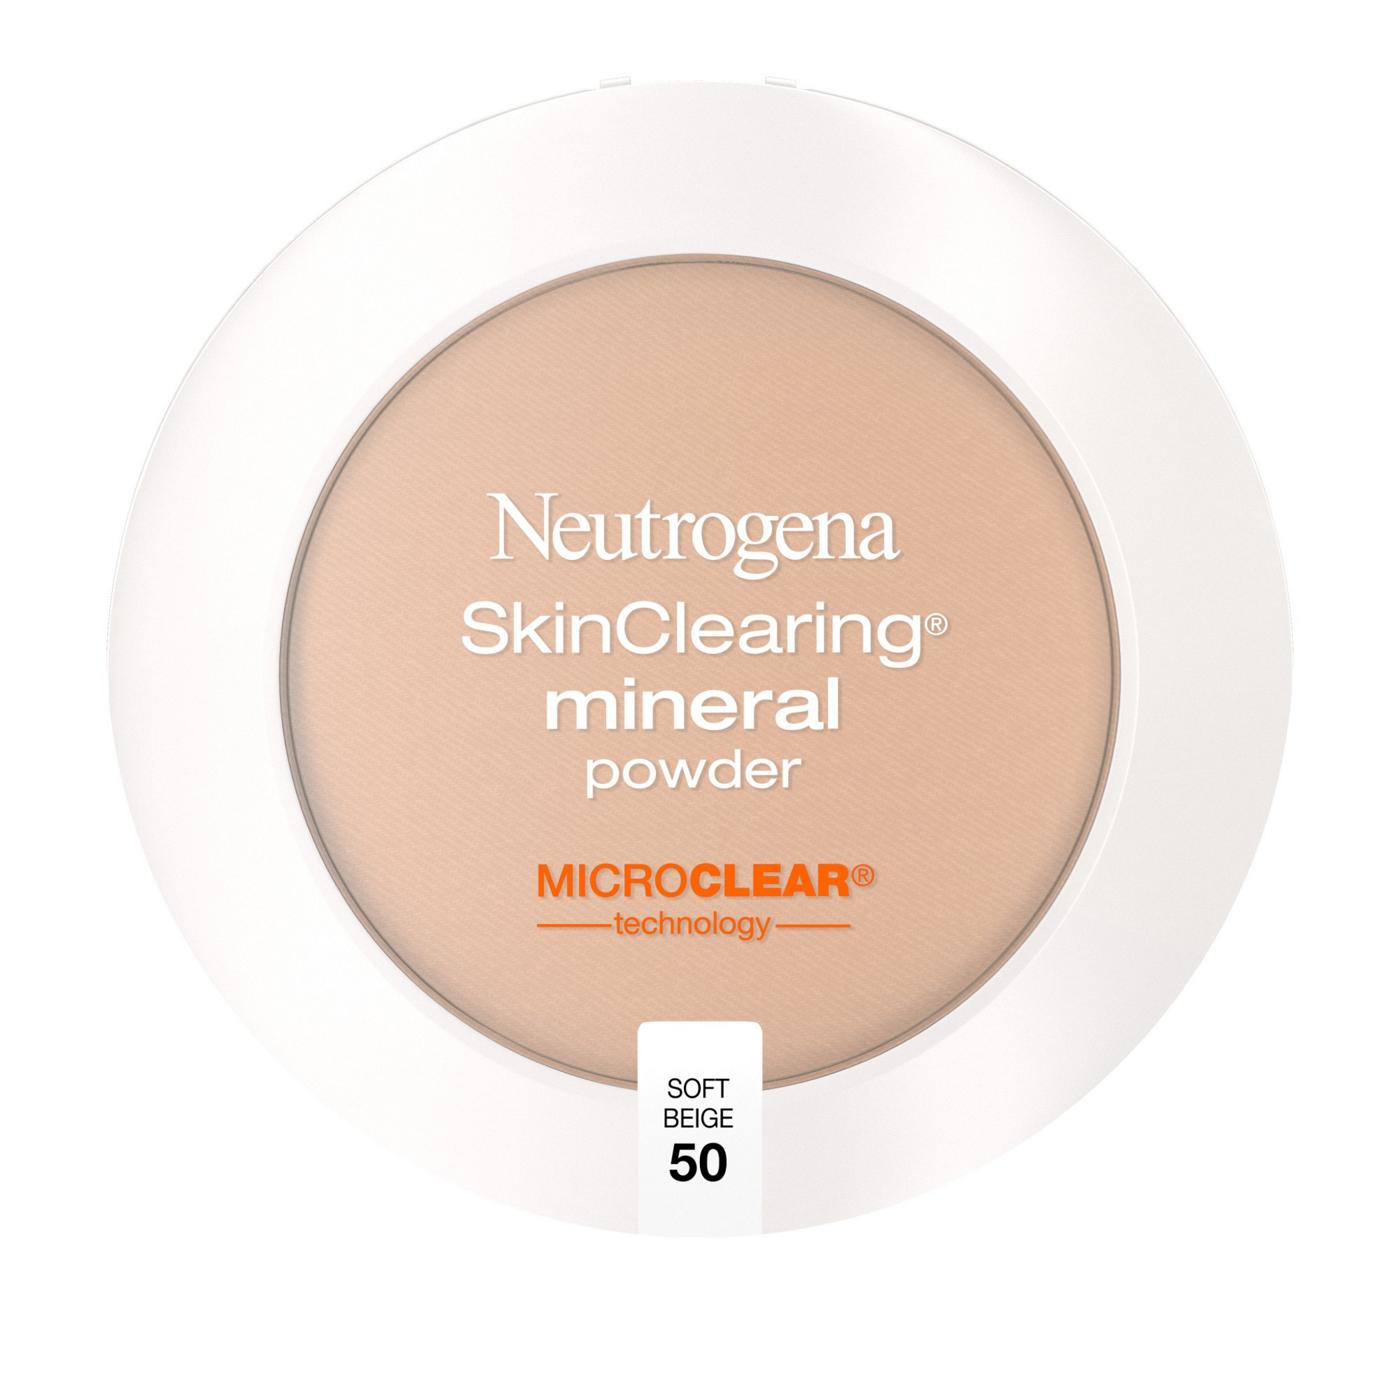 Neutrogena Skinclearing Mineral Powder 50 Soft Beige; image 1 of 5